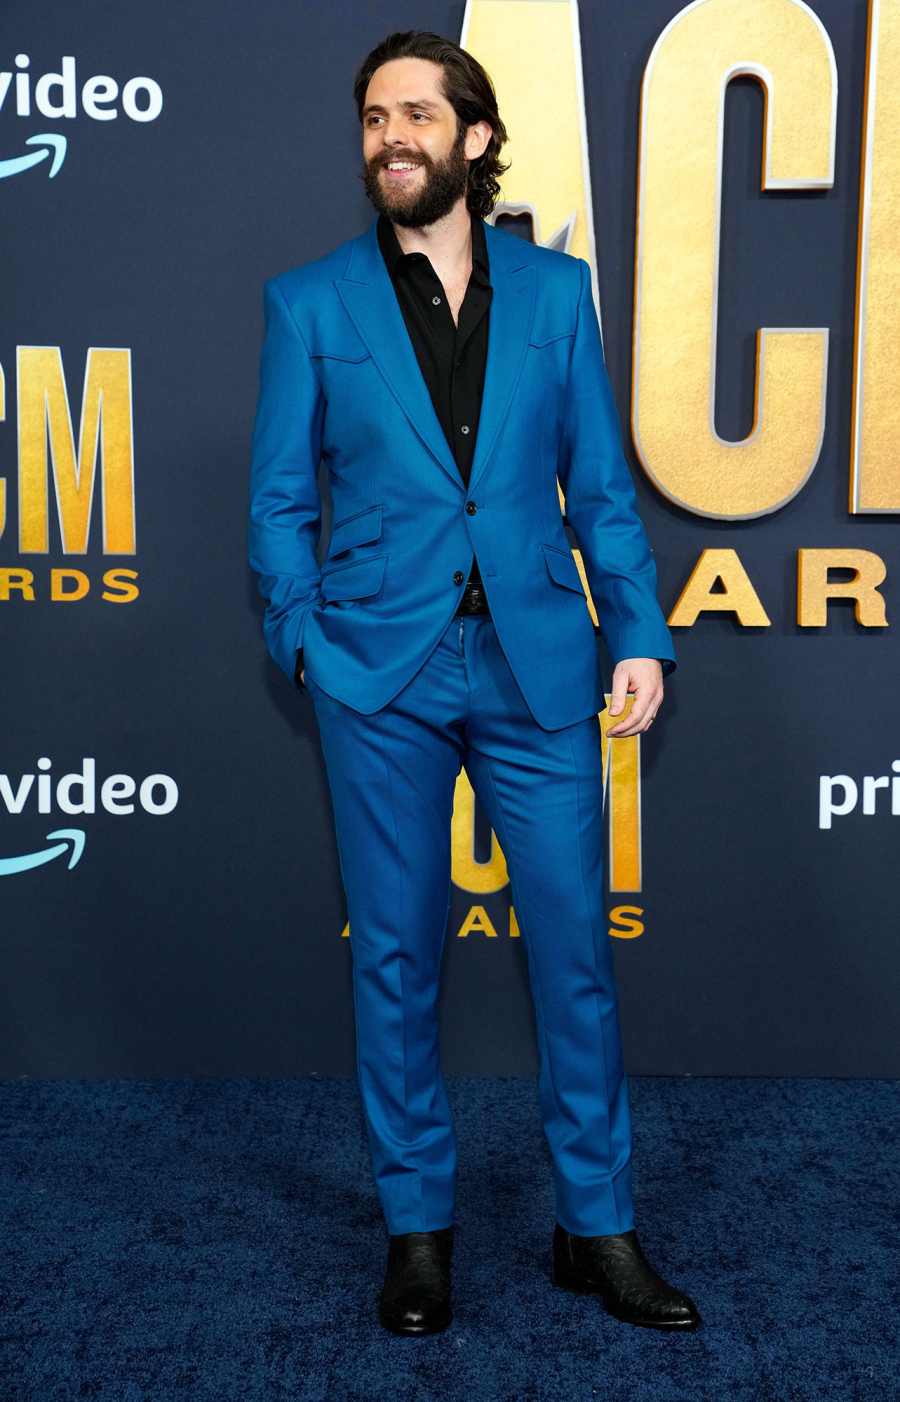 Thomas Rhett The Best Dressed Hottest Men at the ACM Awards 2022